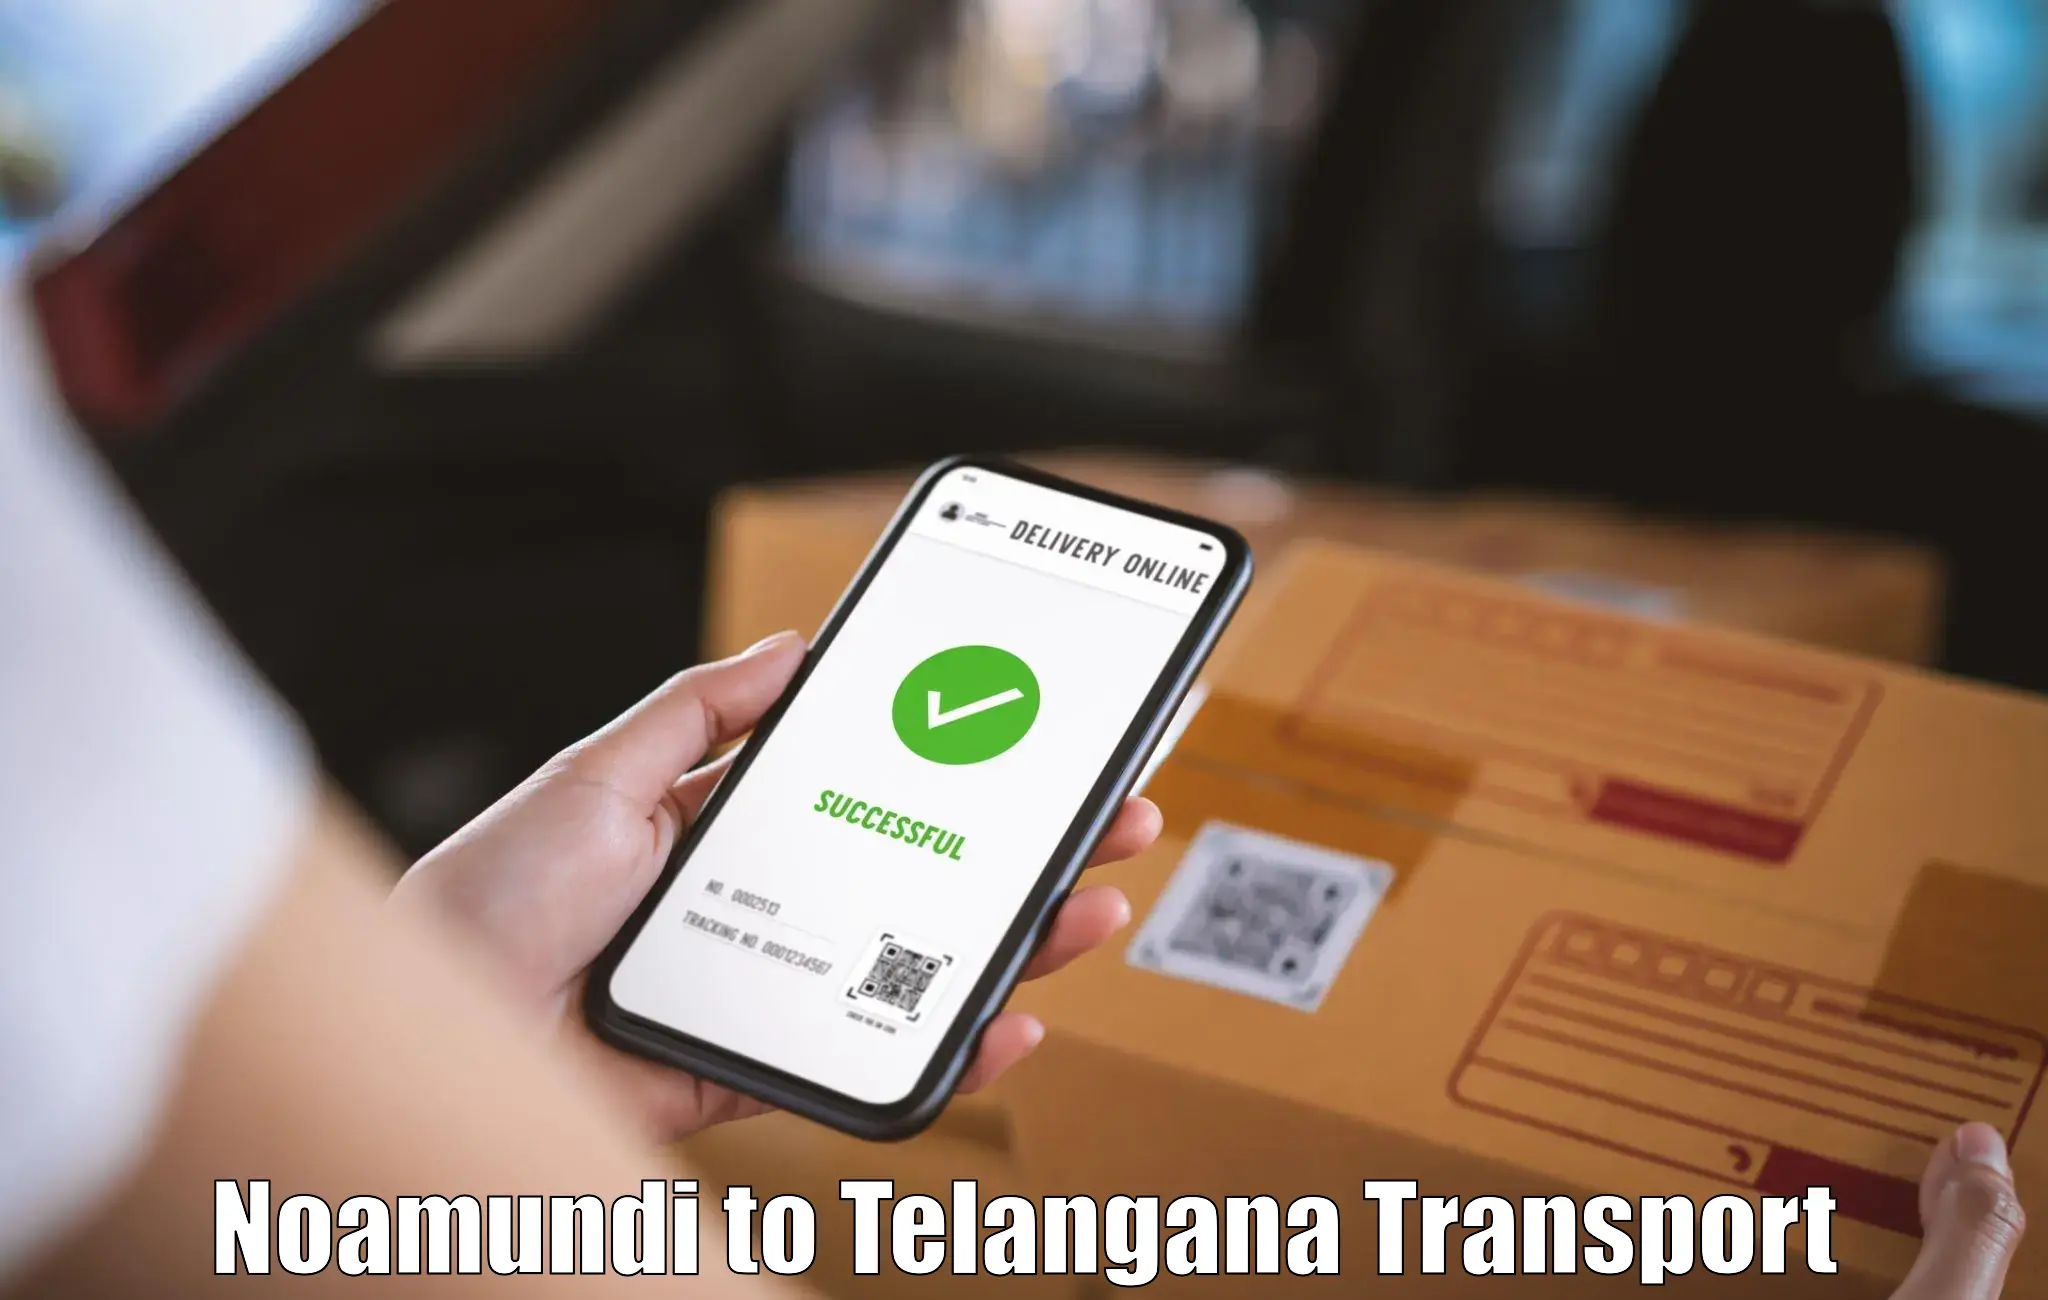 Transport in sharing Noamundi to Nereducharla